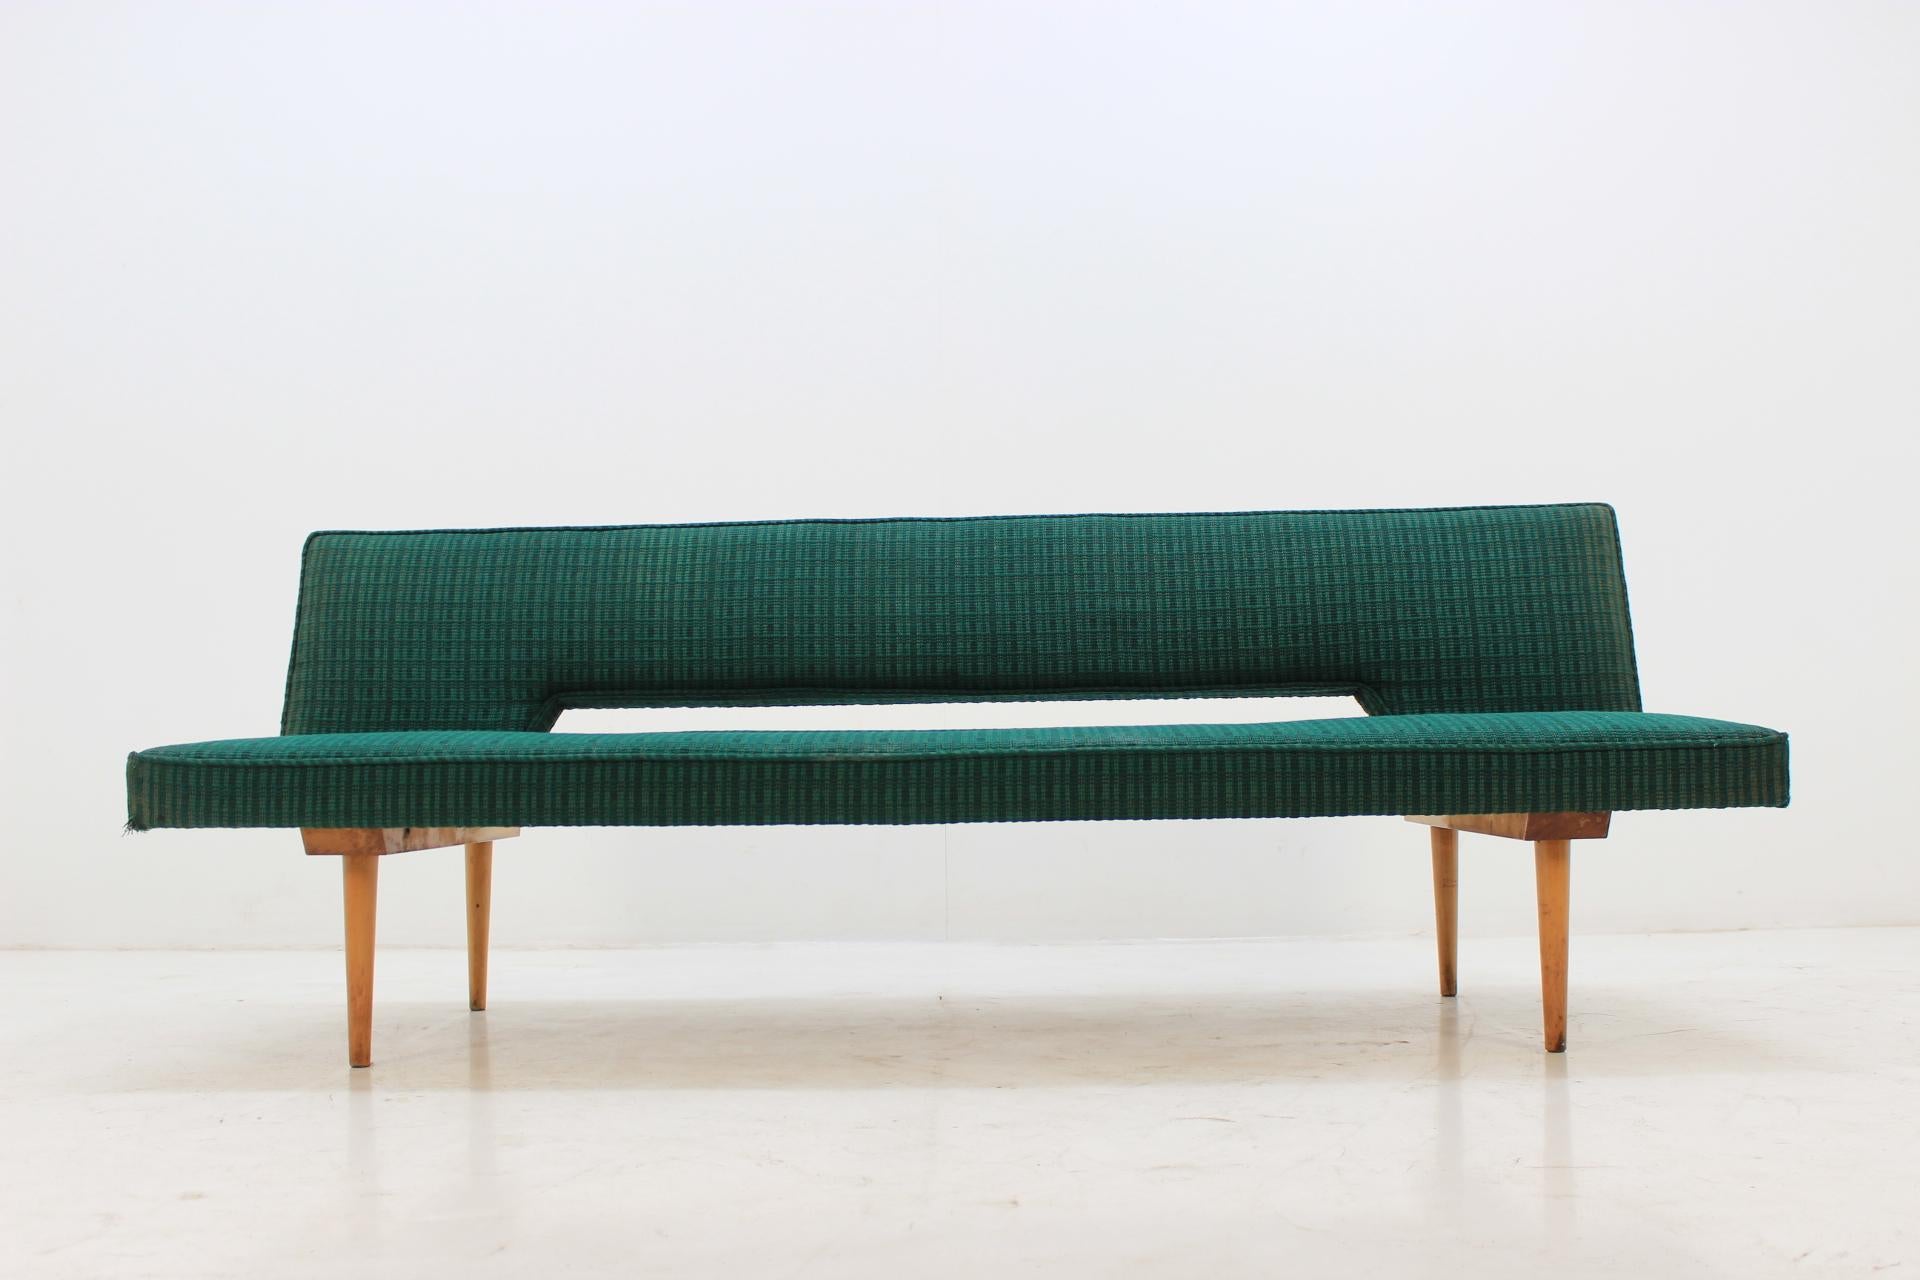 - 1960s, Czechoslovakia
- Design: Miroslav Navrátil
- Original condition: suitable for new upholstery.